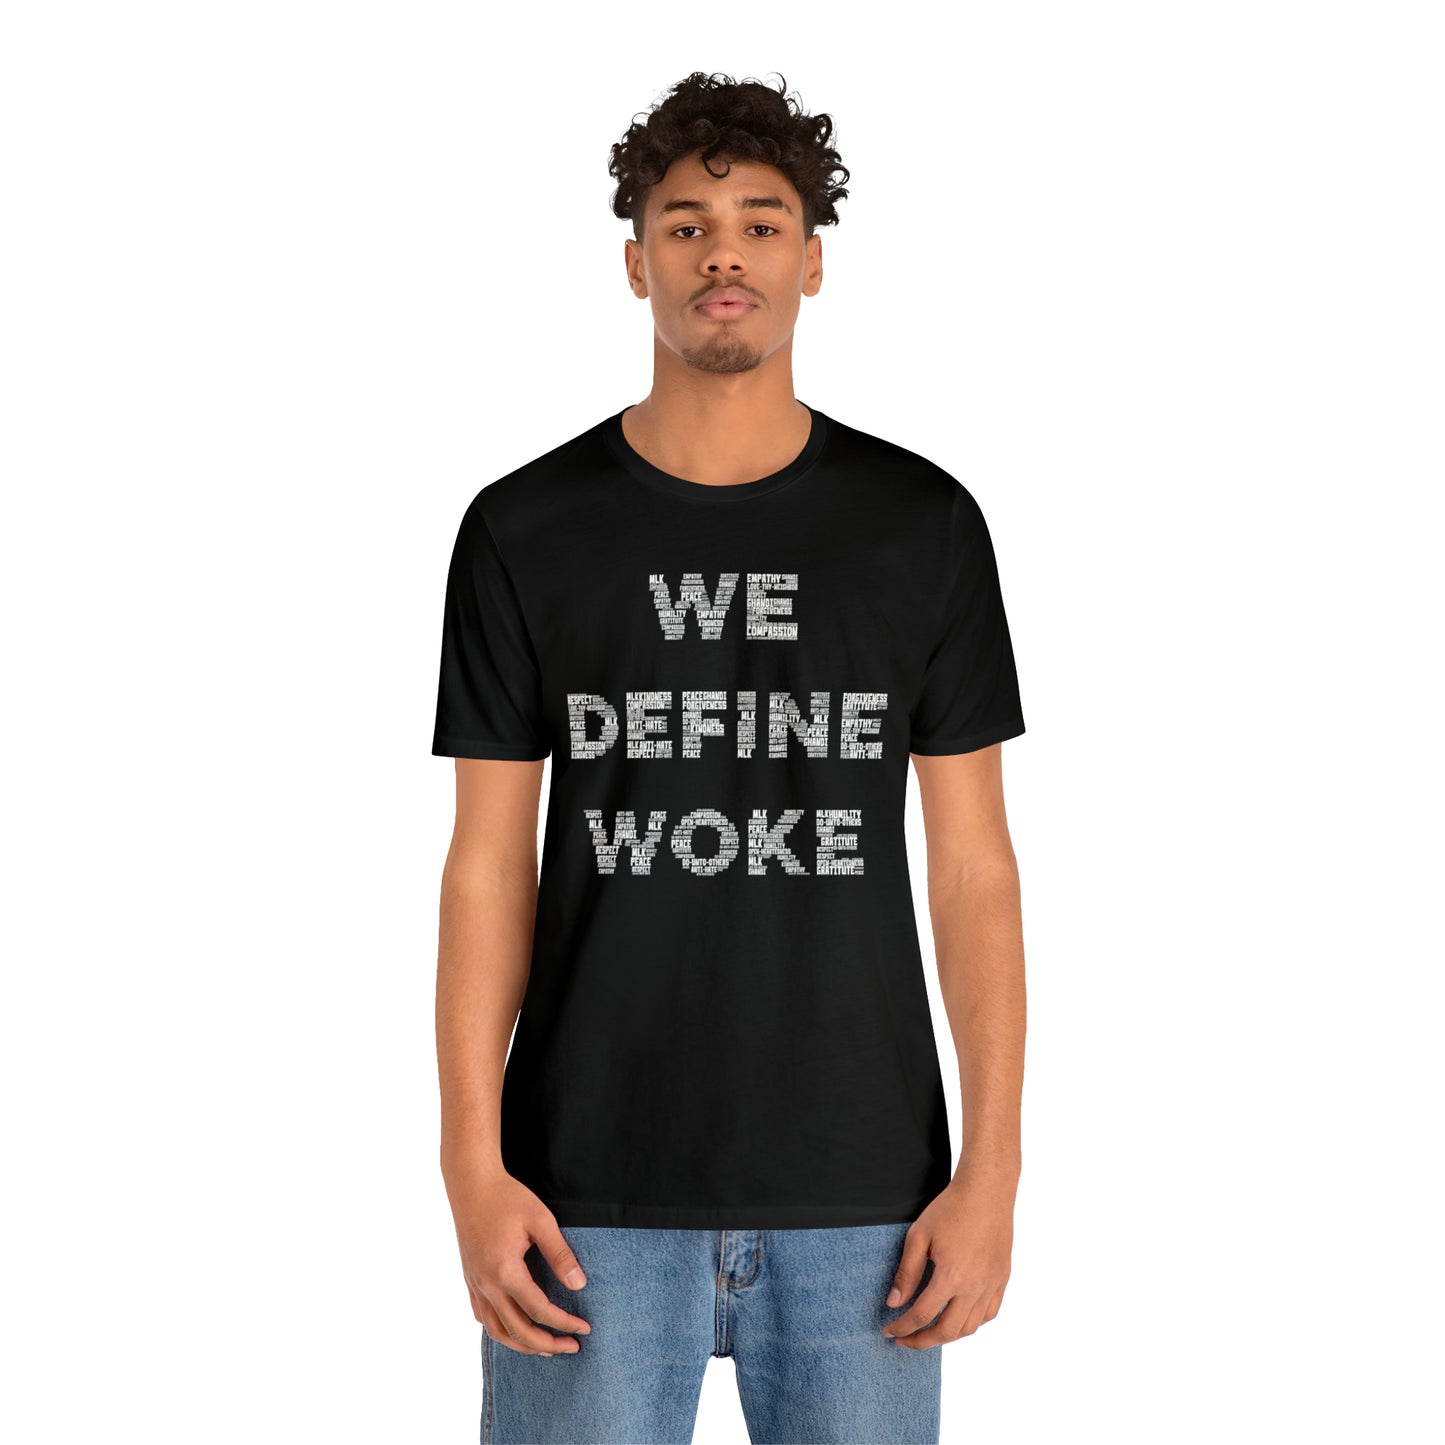 We Define Woke T-shirt